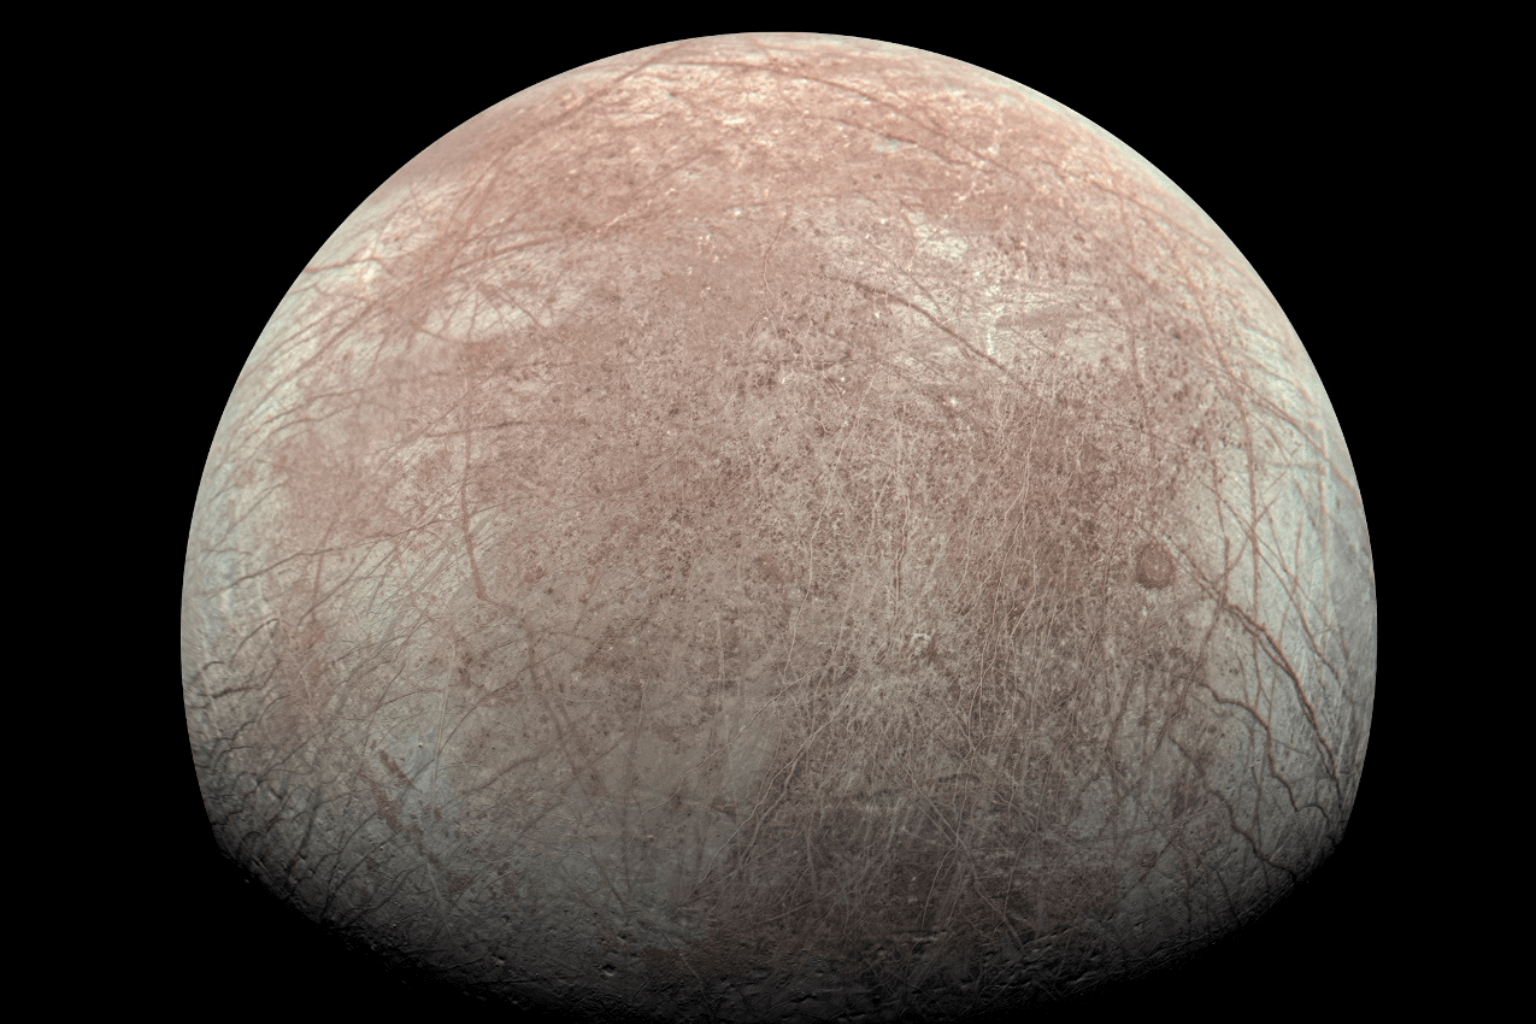 NASA is sending a poem to Jupiter’s moon Europa